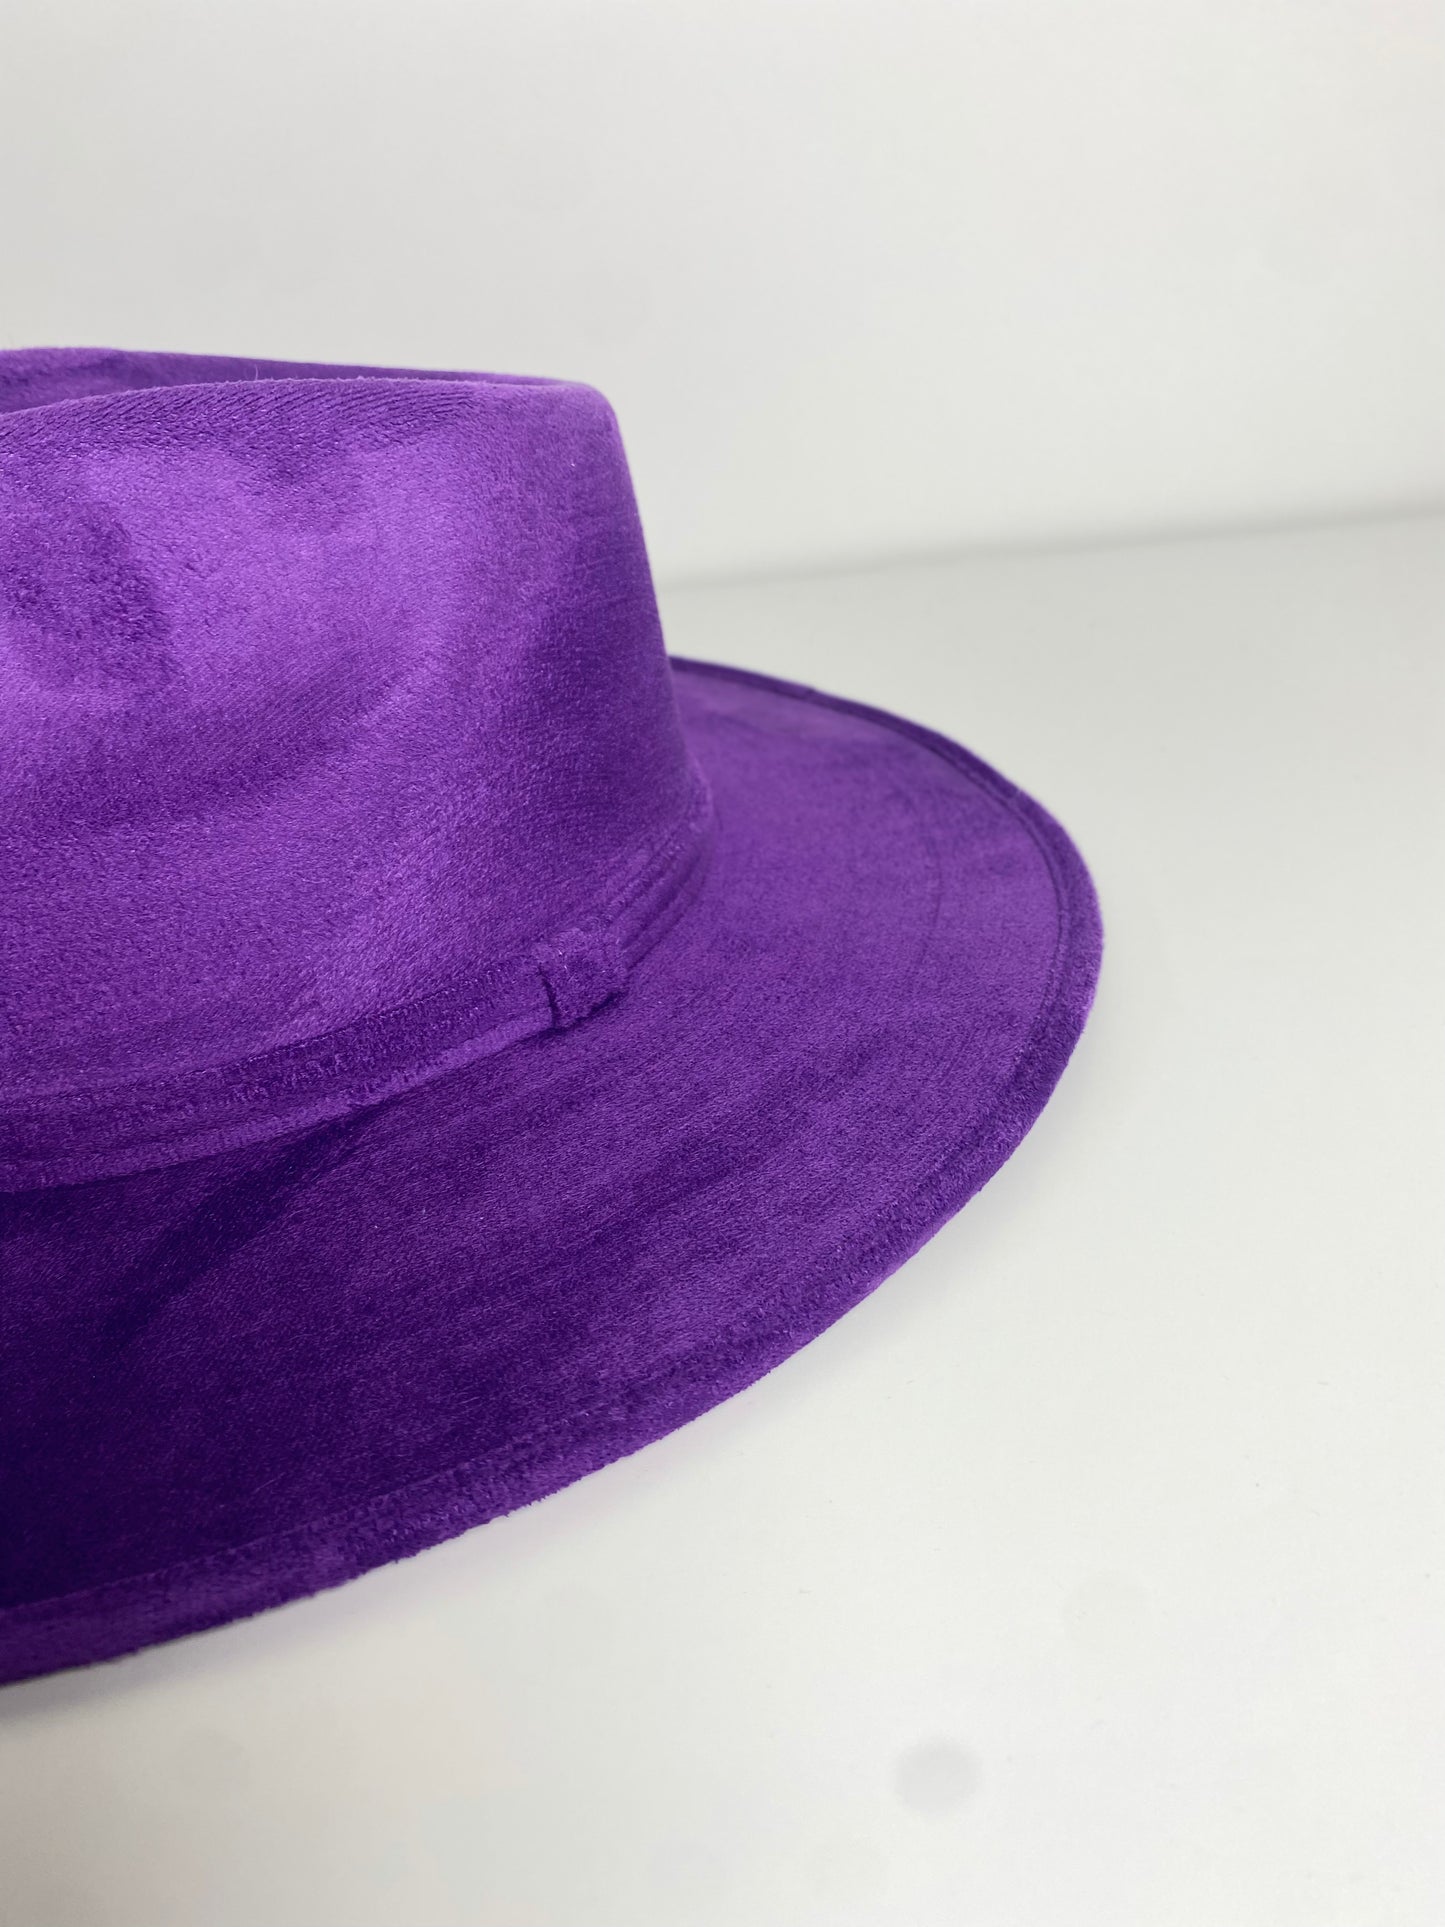 Izzy Rancher Hat - Purple